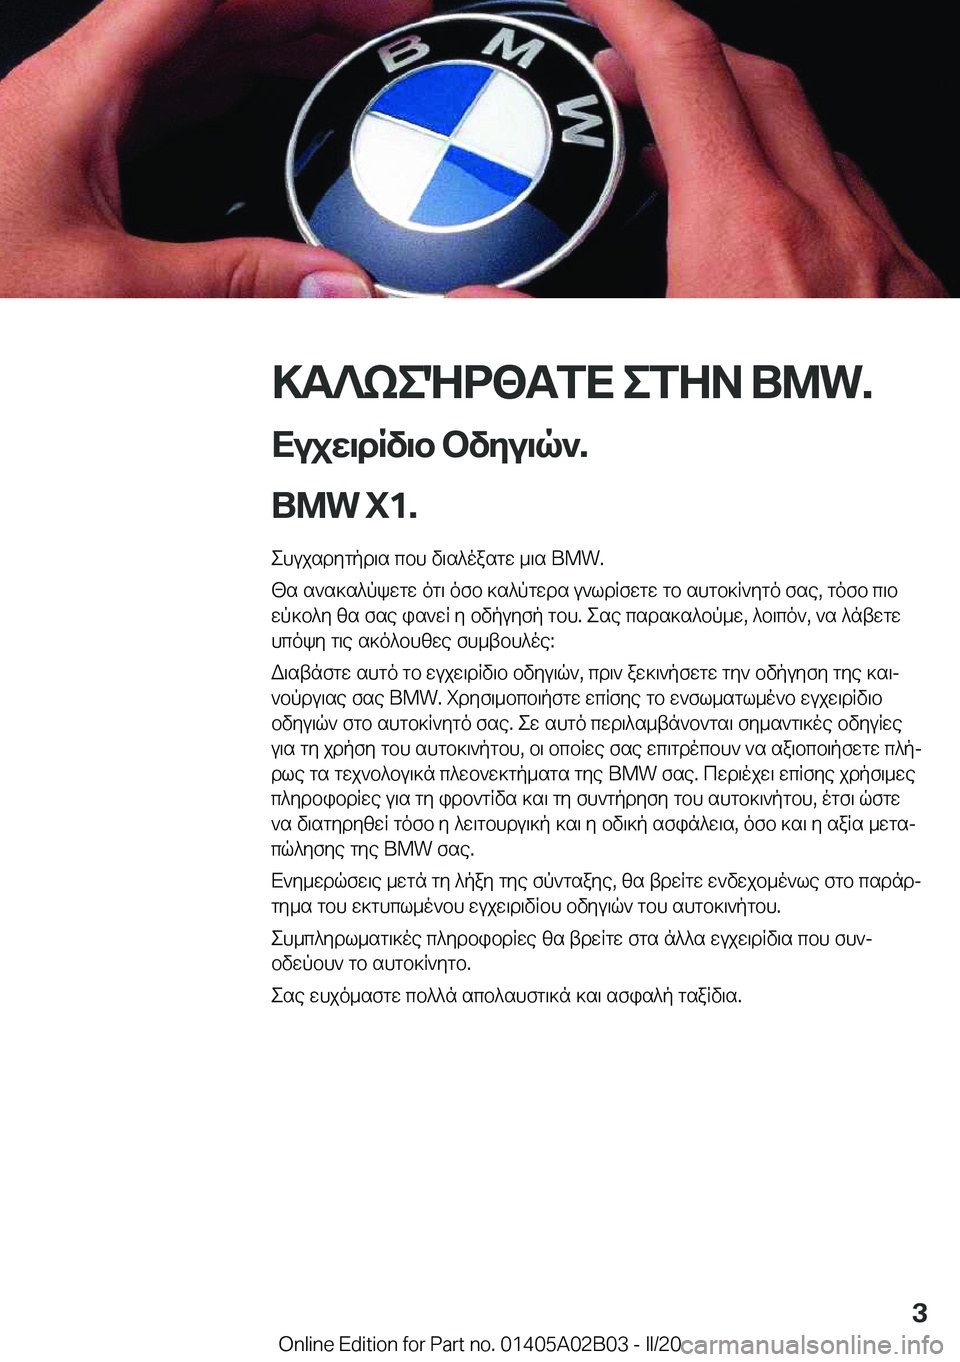 BMW X1 2020  ΟΔΗΓΌΣ ΧΡΉΣΗΣ (in Greek) >T?keNd<TfX�efZA��B�M�W�.
Xujw\dRv\b�bvyu\q`�.
�B�M�W��X�1�. ehujsdygpd\s�cbh�v\s^oasgw�_\s��B�M�W�.
<s�s`s]s^pkwgw�o